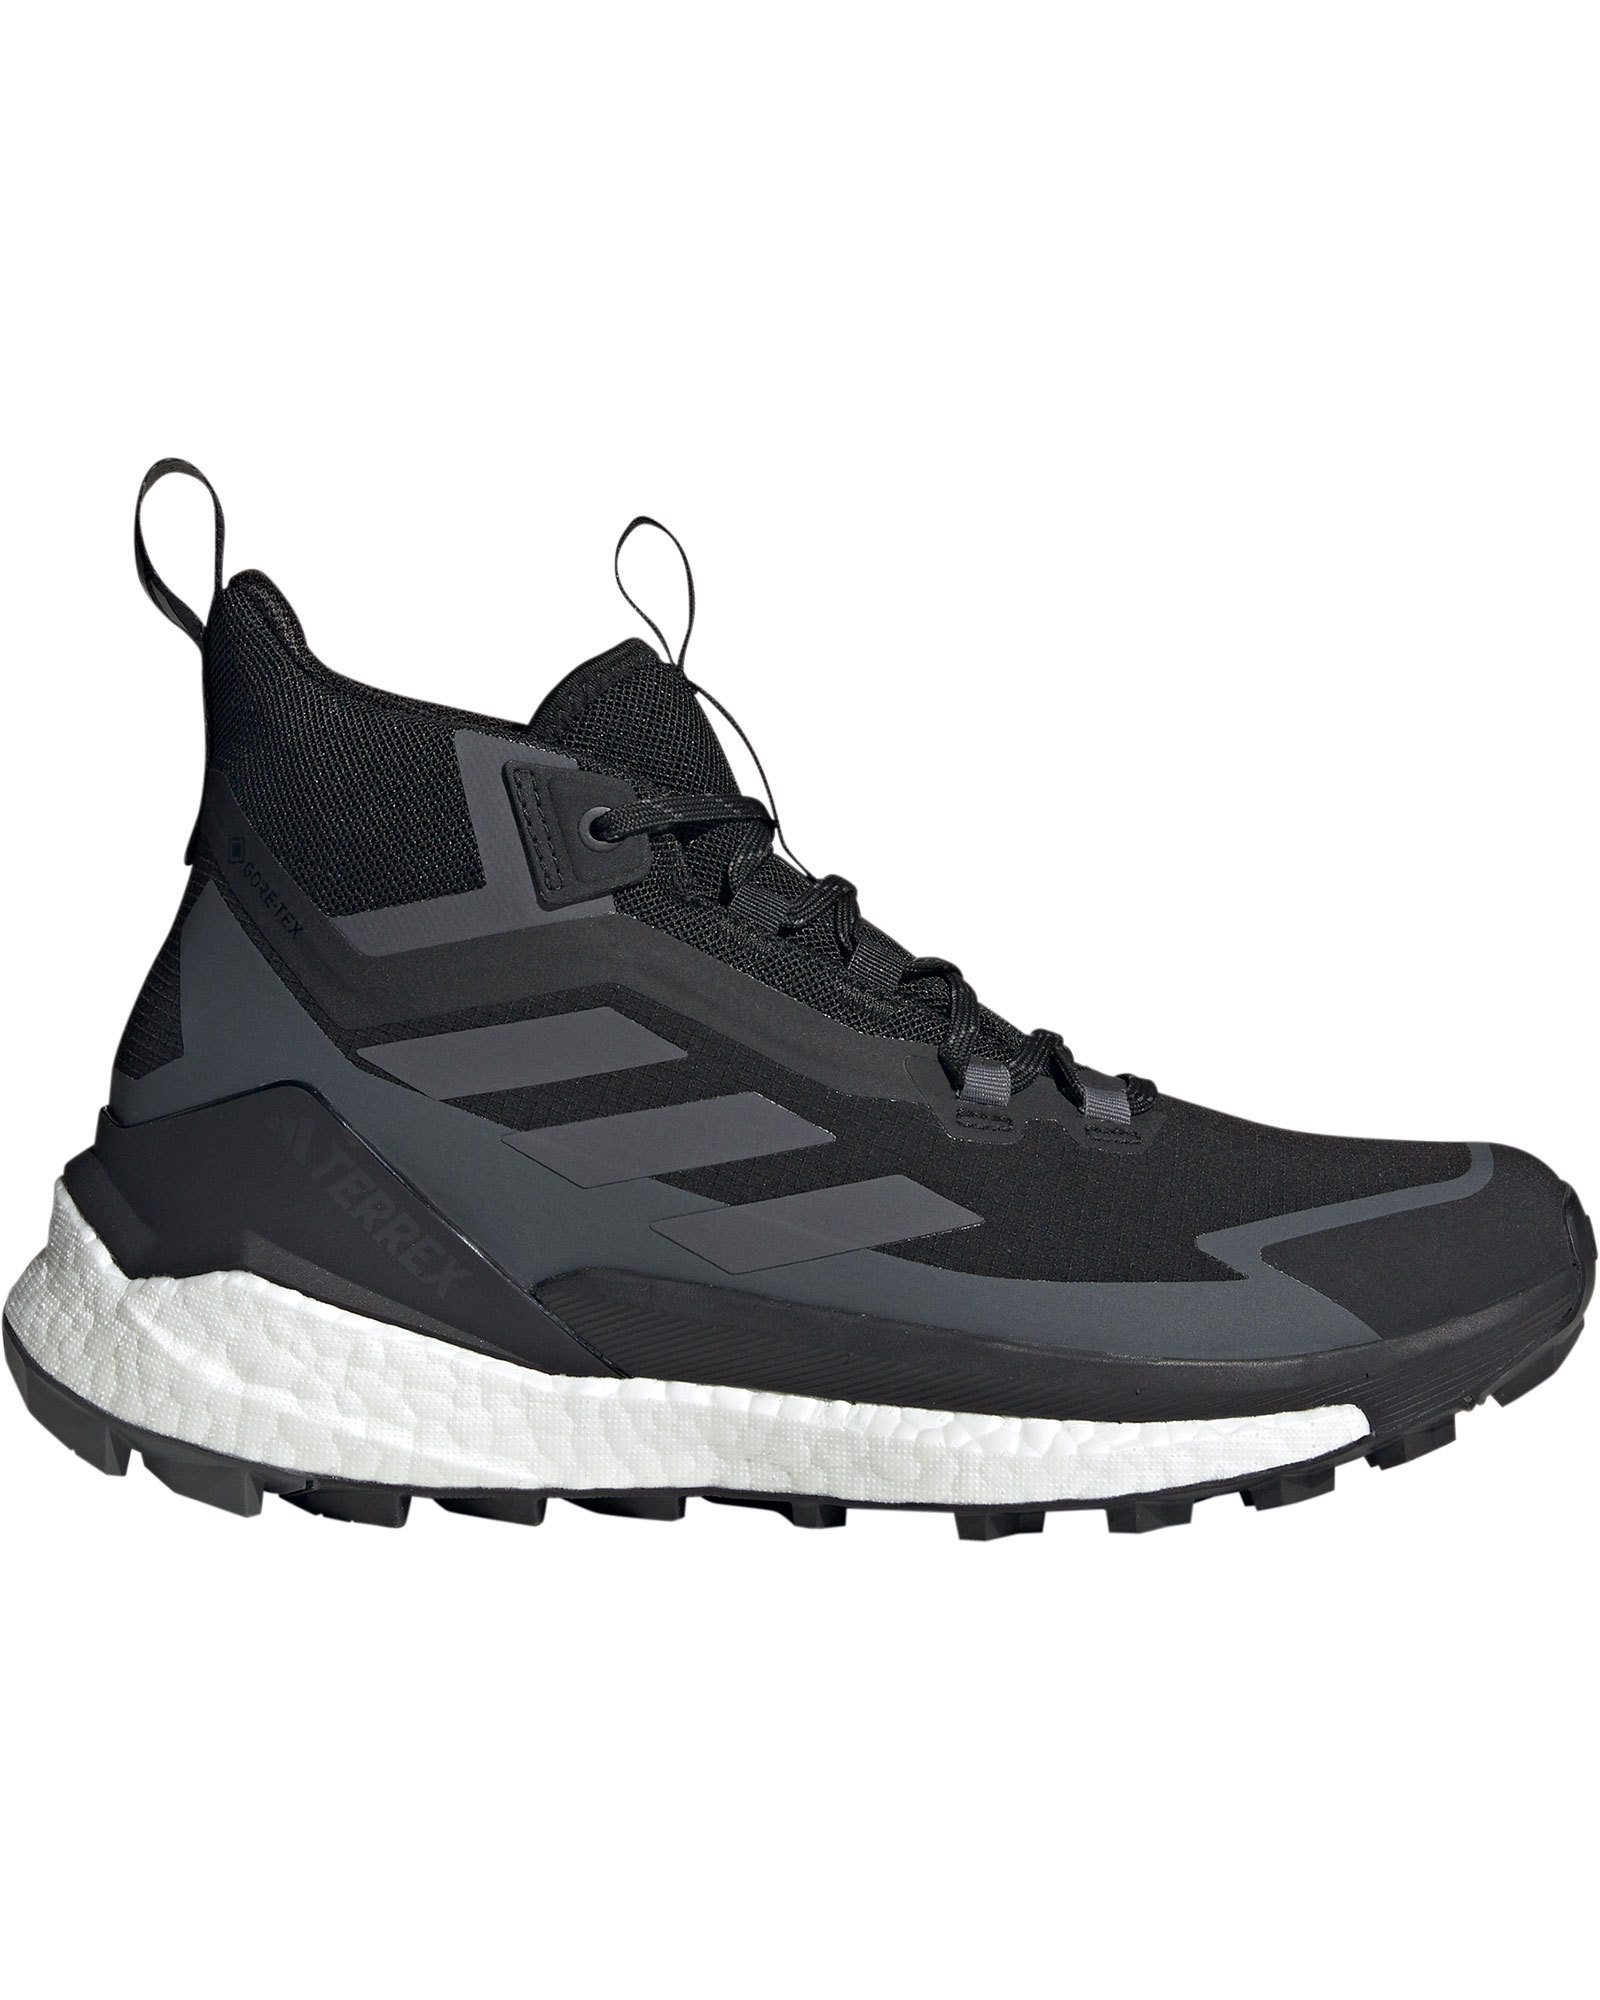 adidas TERREX Free Hiker 2 GORE TEX Men’s Boots - Core Black/Grey Six/Grey Three UK 11.5